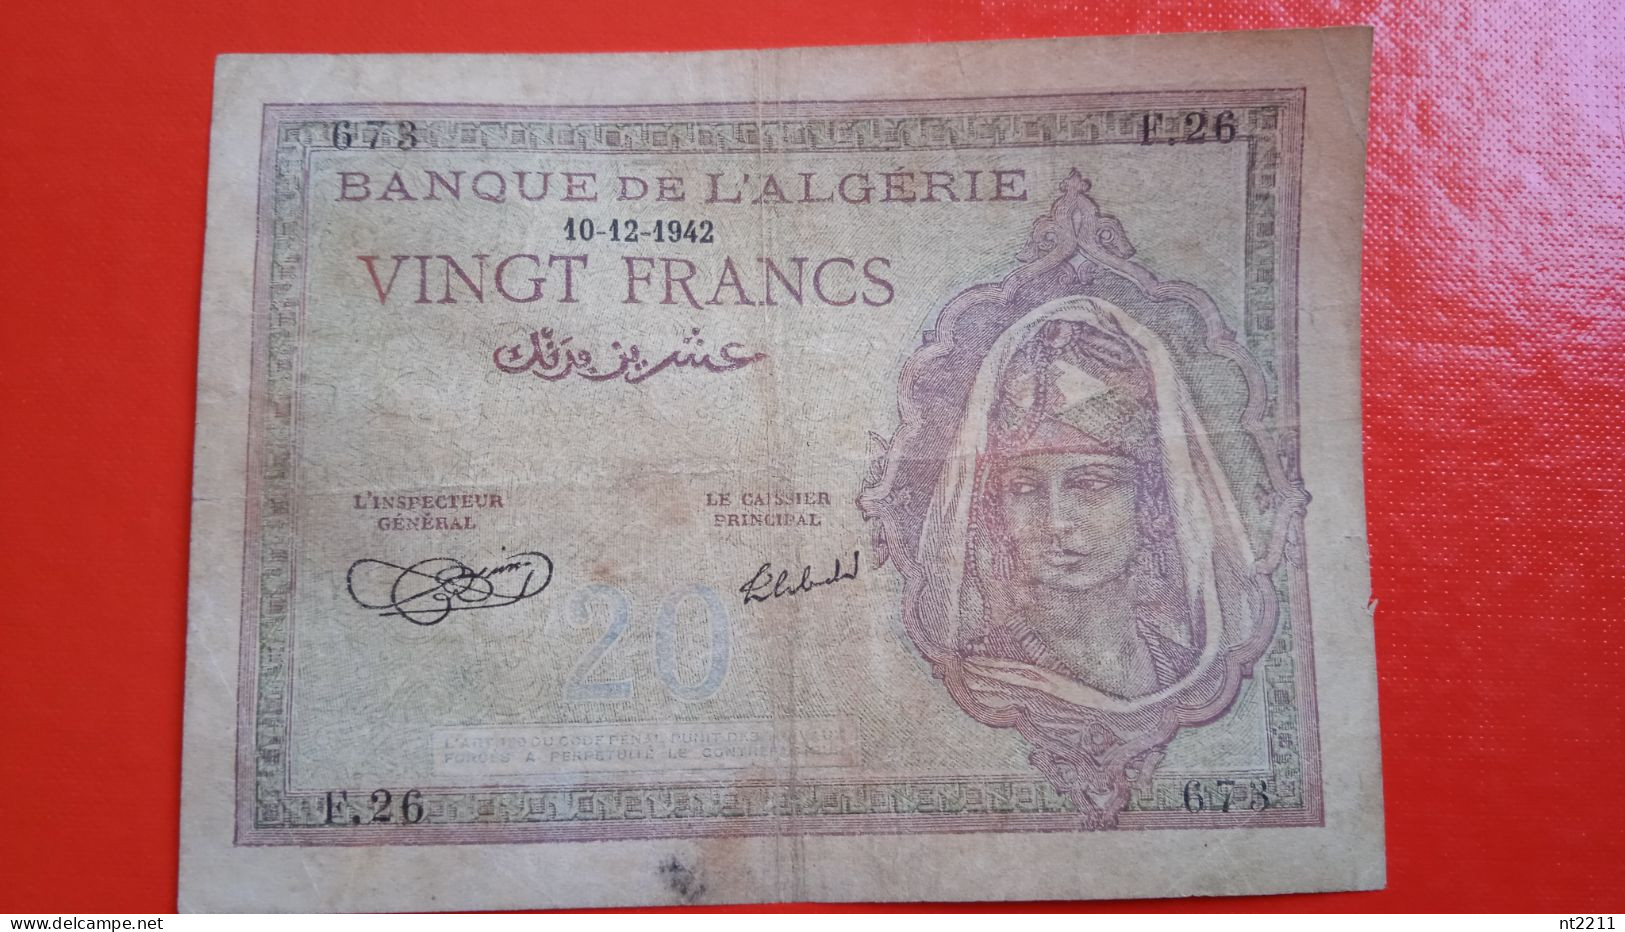 Banknote 20 Francs Algeria 1942 - Algerien